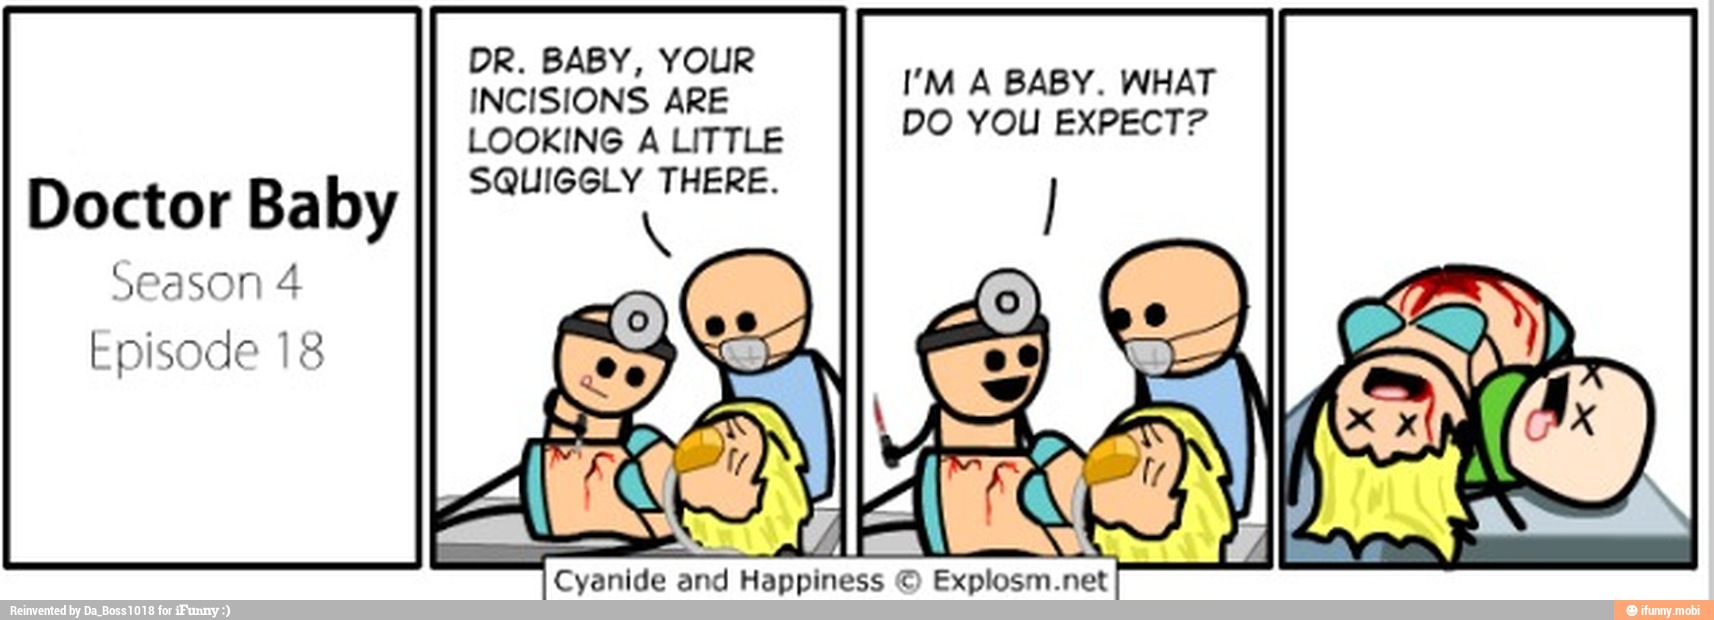 Doctor Baby Season 4 Cyanide and Happiness © Explosm.net.